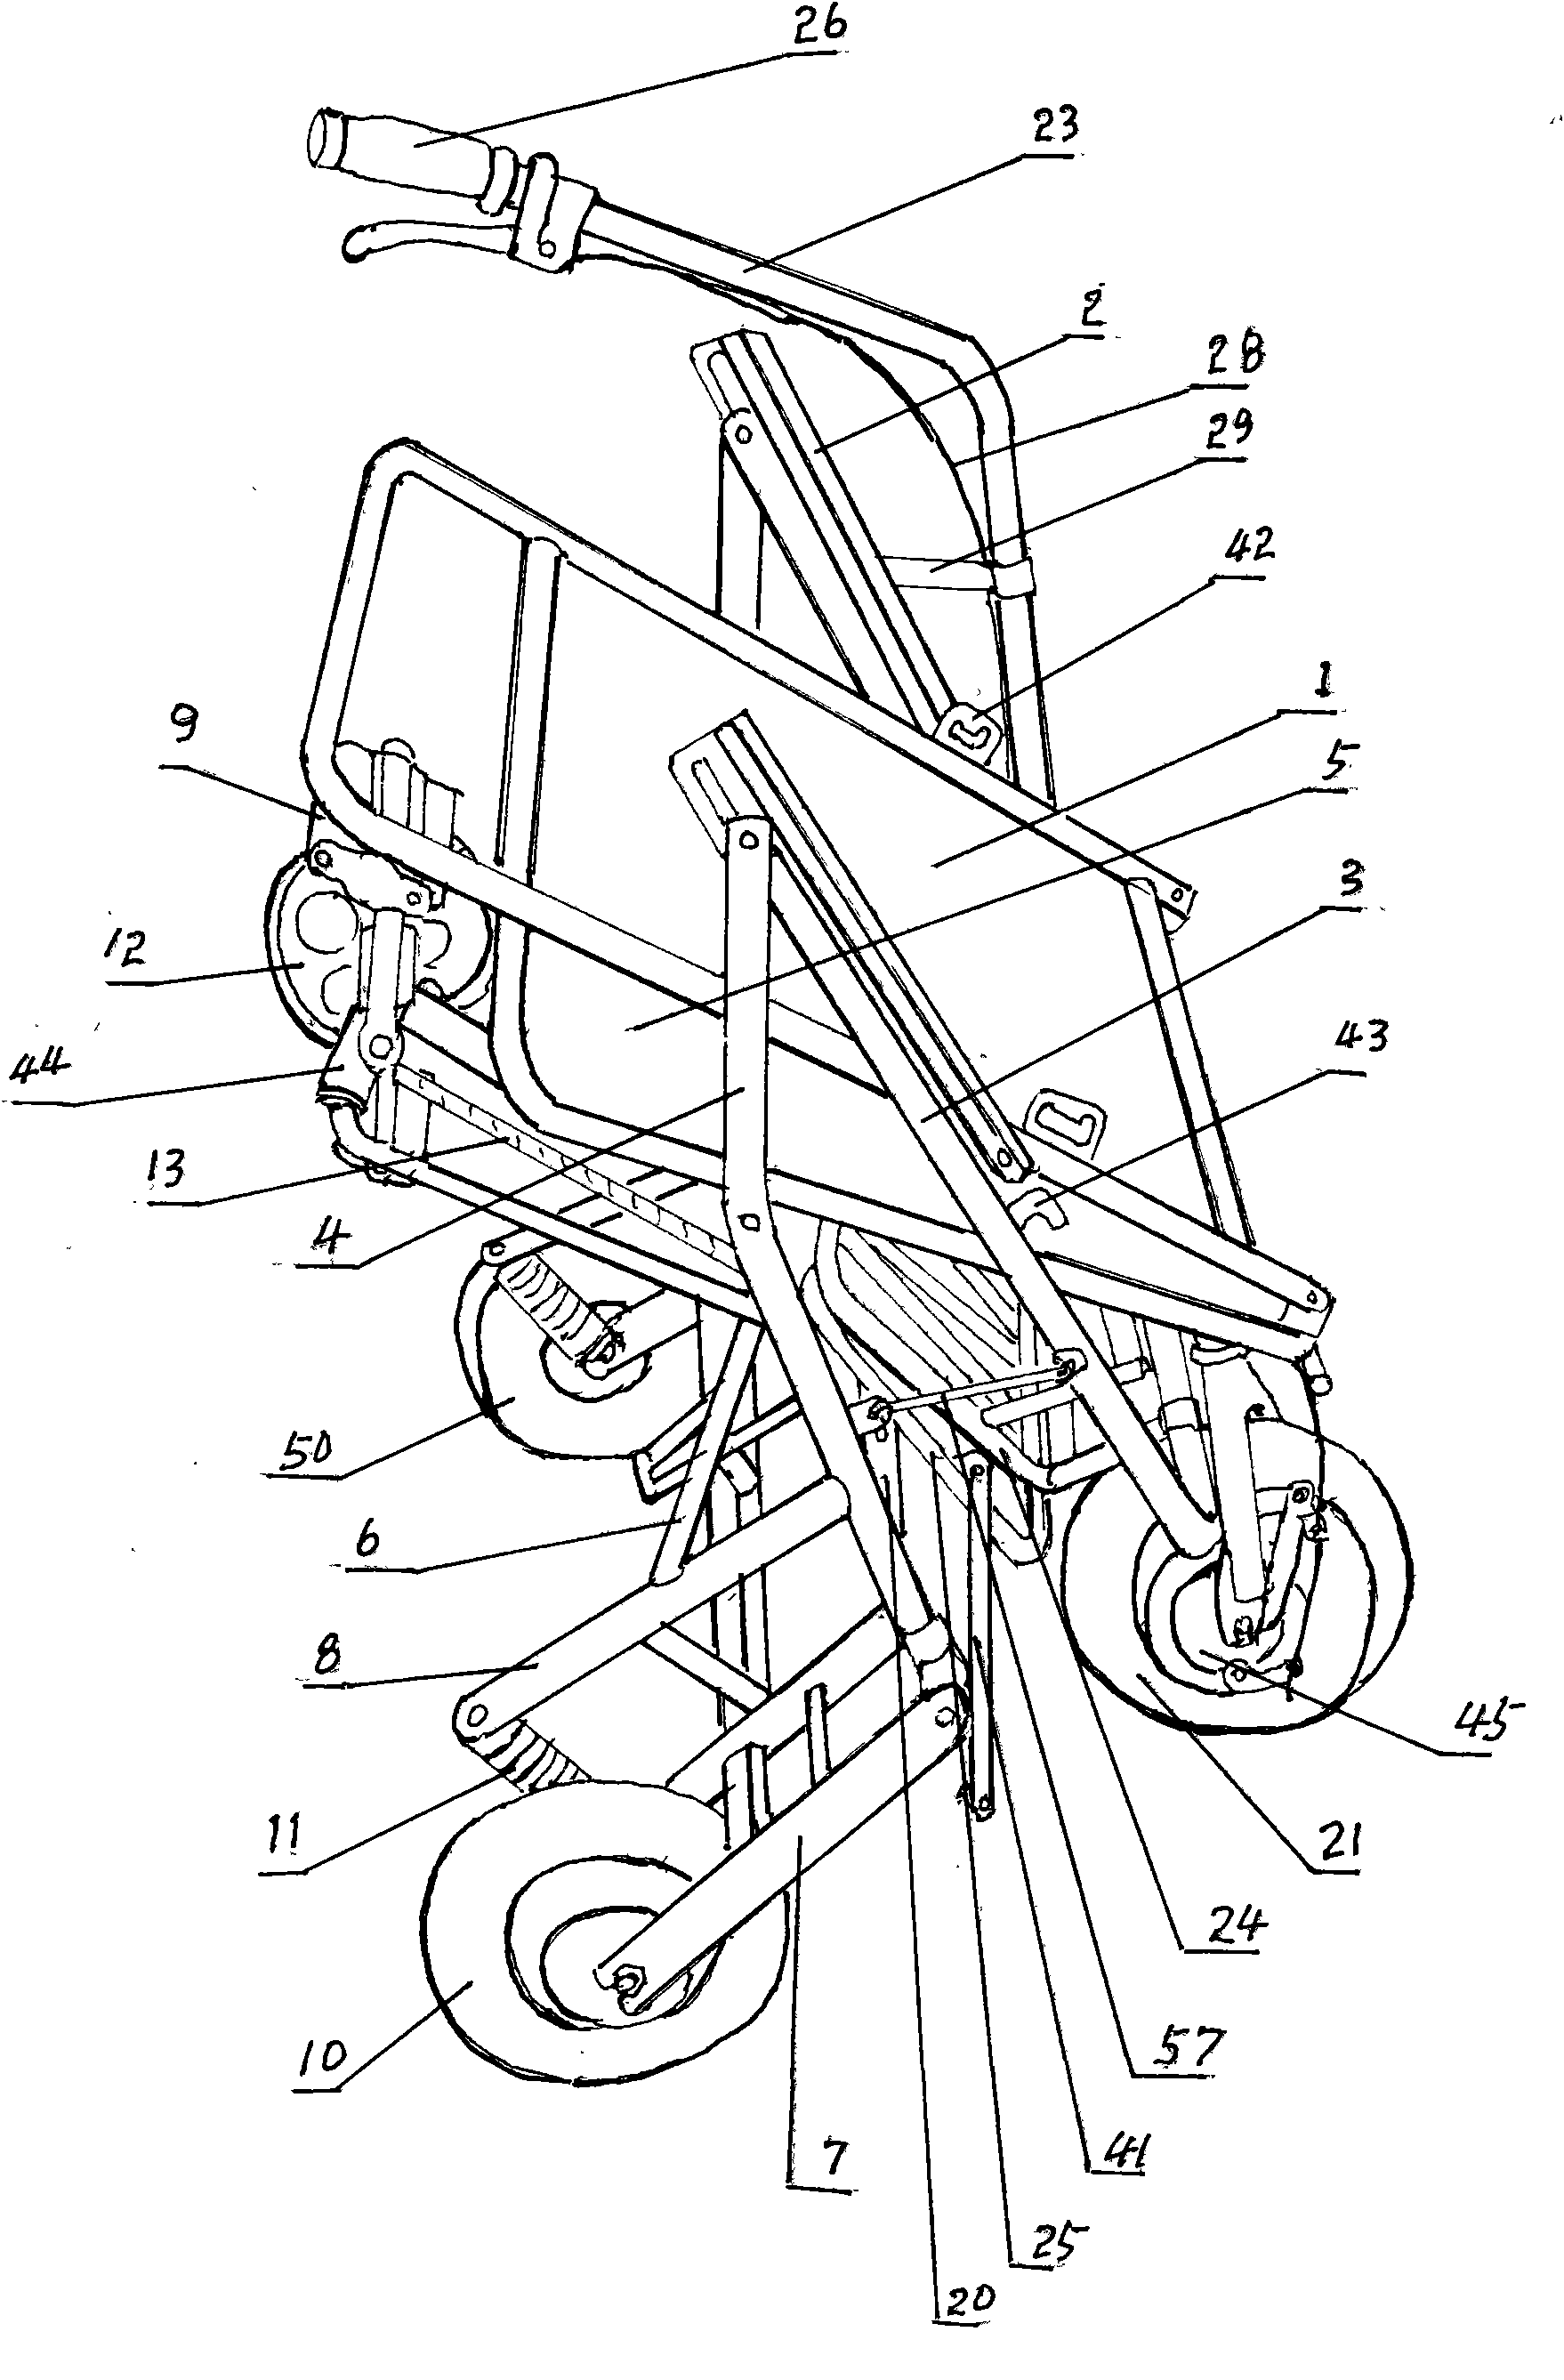 Folding backwards-run tricycle